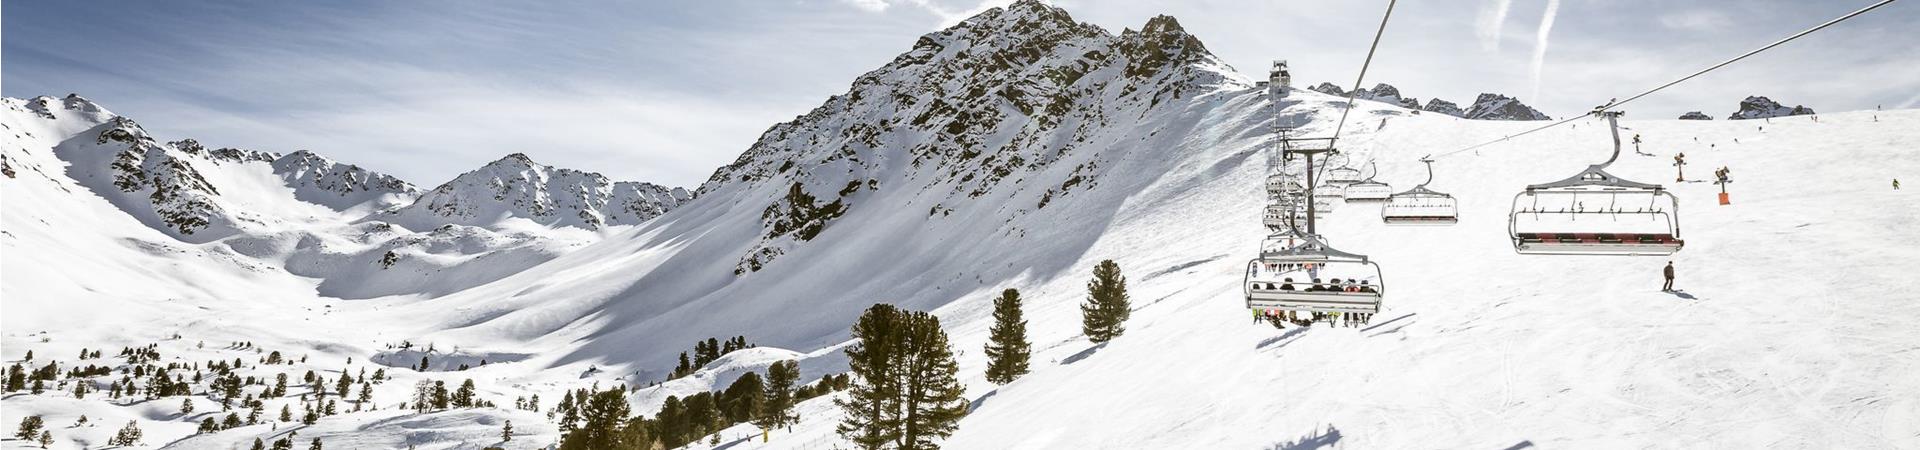 ©-TVB-Tiroler-Oberland-Nauders-Rudi-Wyhlidal-Skifahren-Zirmbahn-2019 (103).jpg